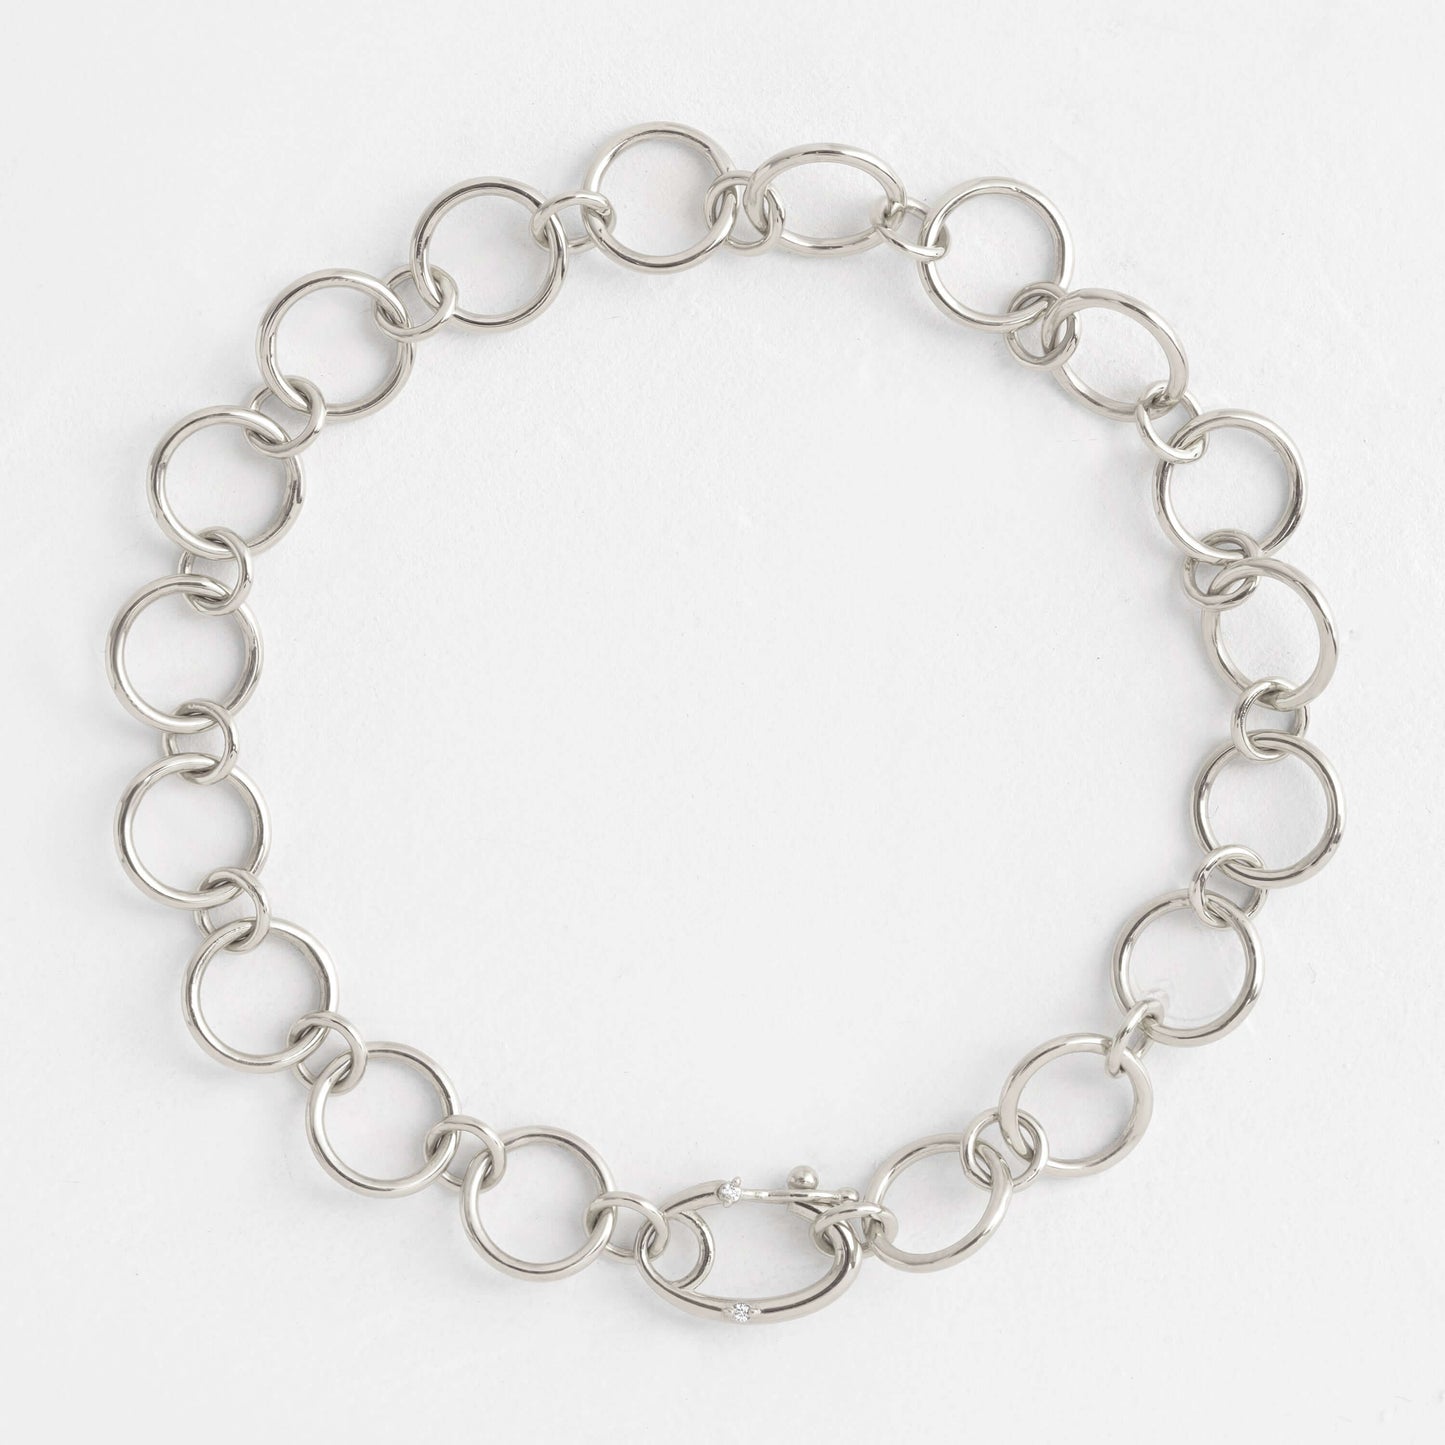 Oval Catch Clasp Chain Bracelet